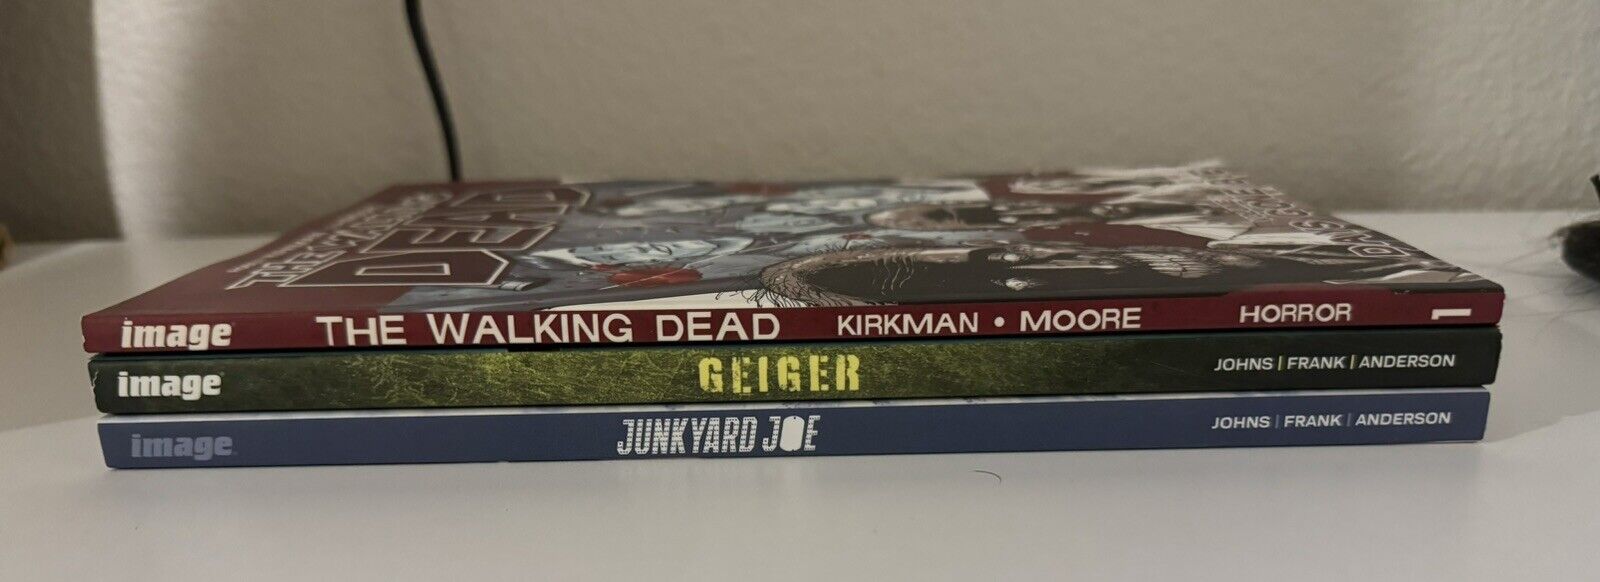 Image TPB Lot - Geiger Vol 1, Junkyard Joe Complete, The Walking Dead Vol 1